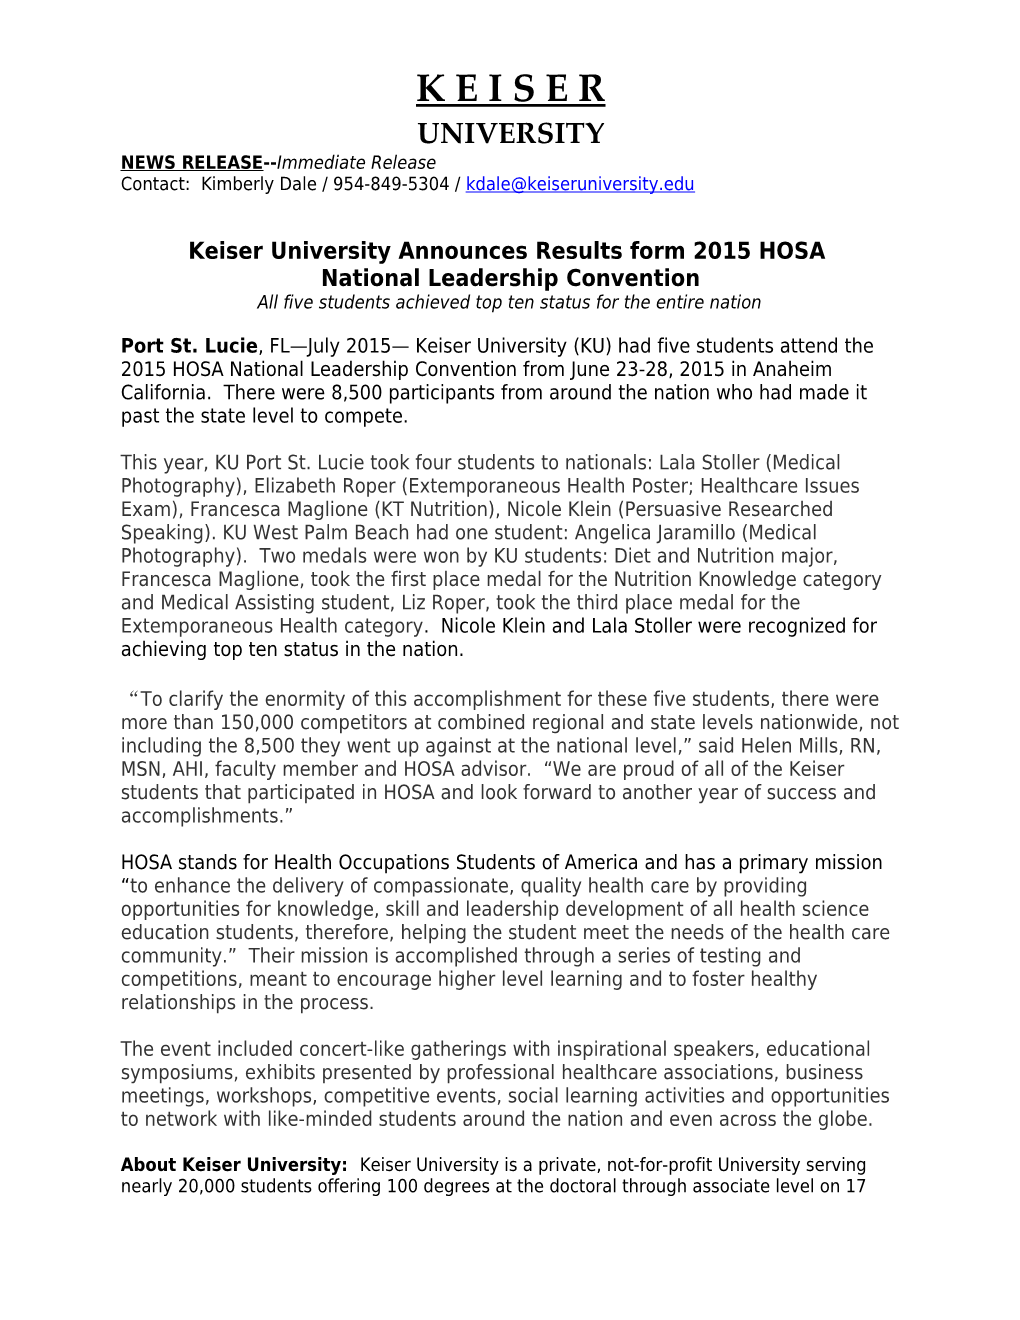 Keiser University Announces Results Form 2015 HOSA